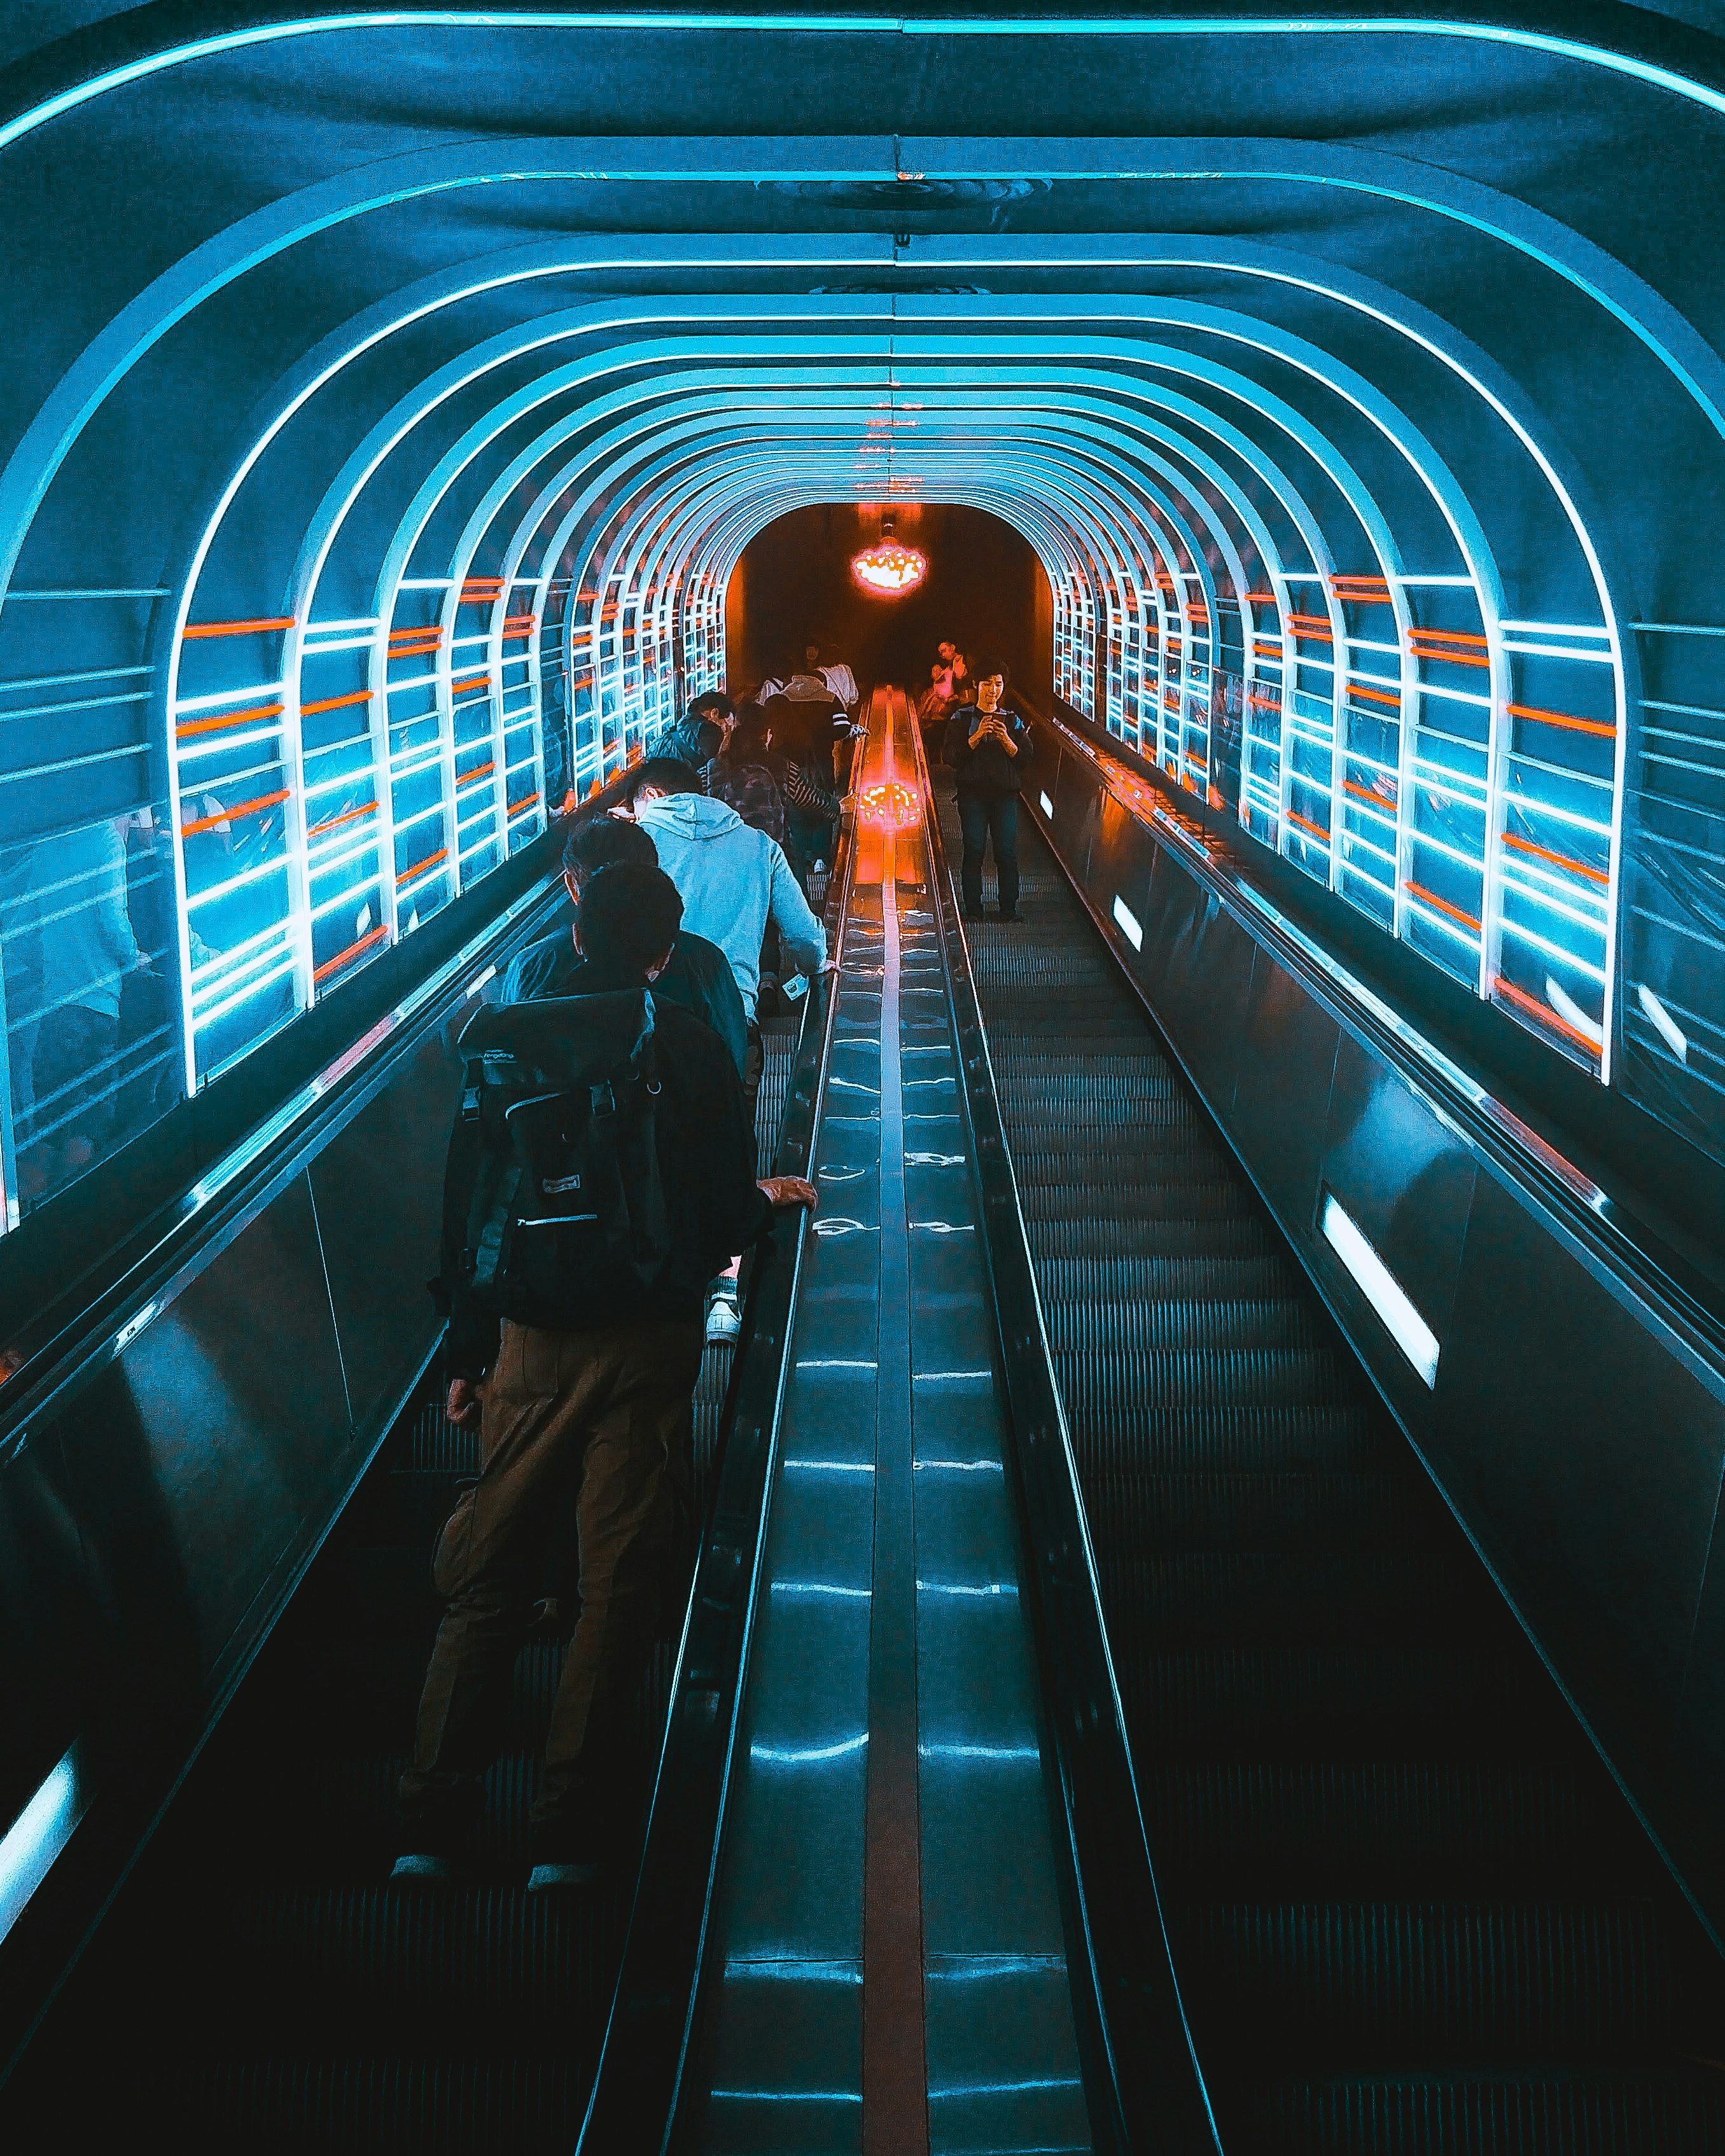 photo of people using escalators under blue LED lights